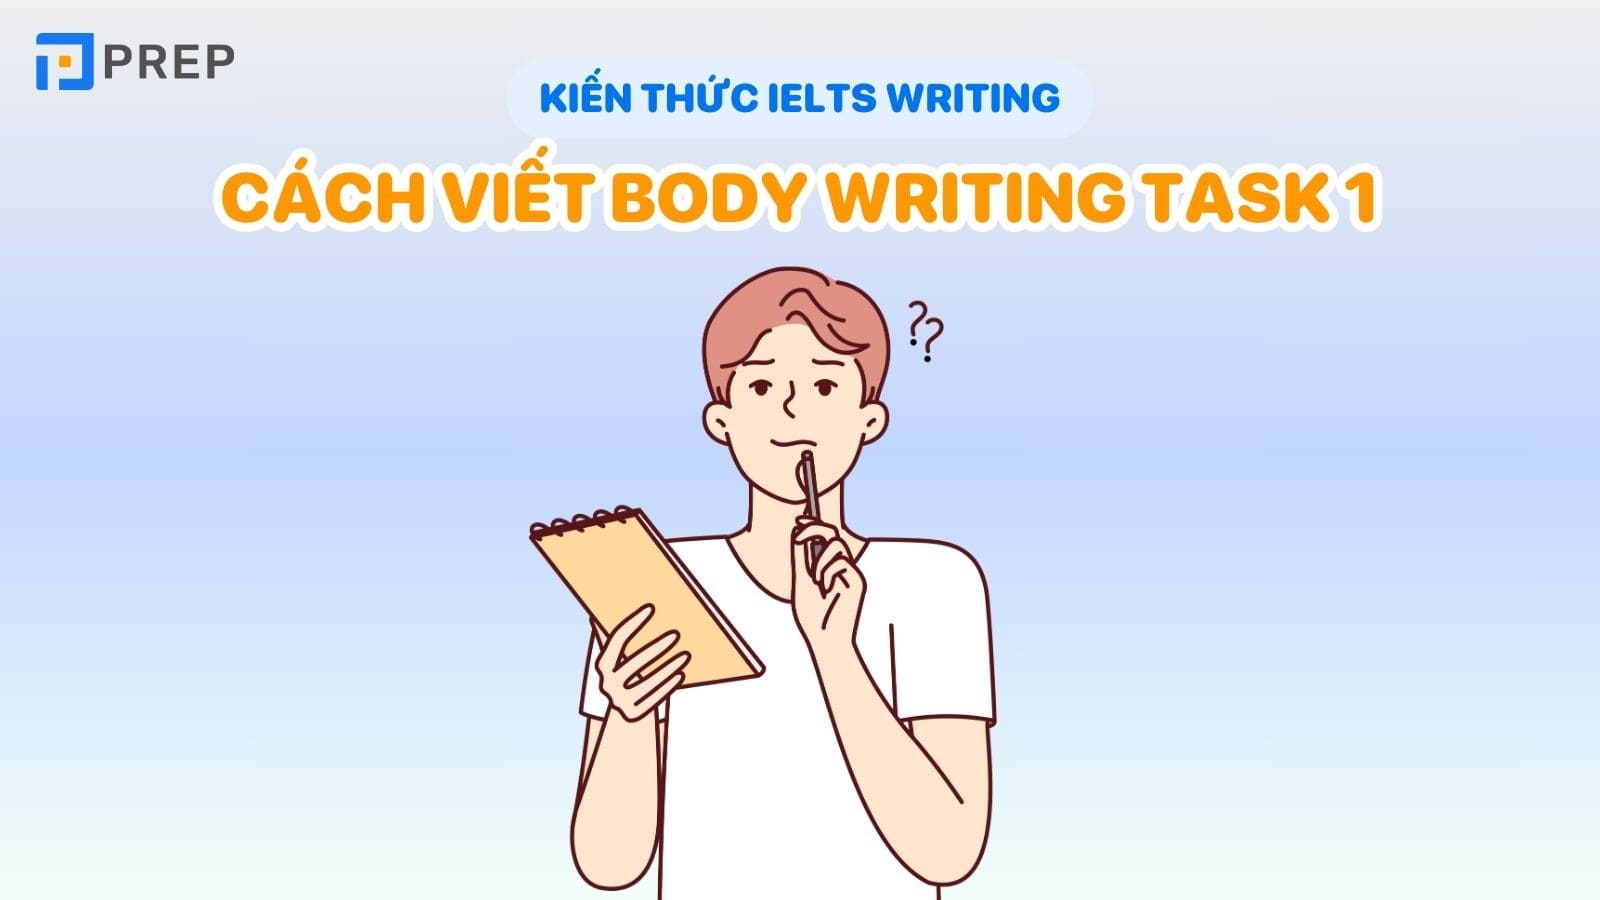 cach-viet-body-writing-task-1.jpg